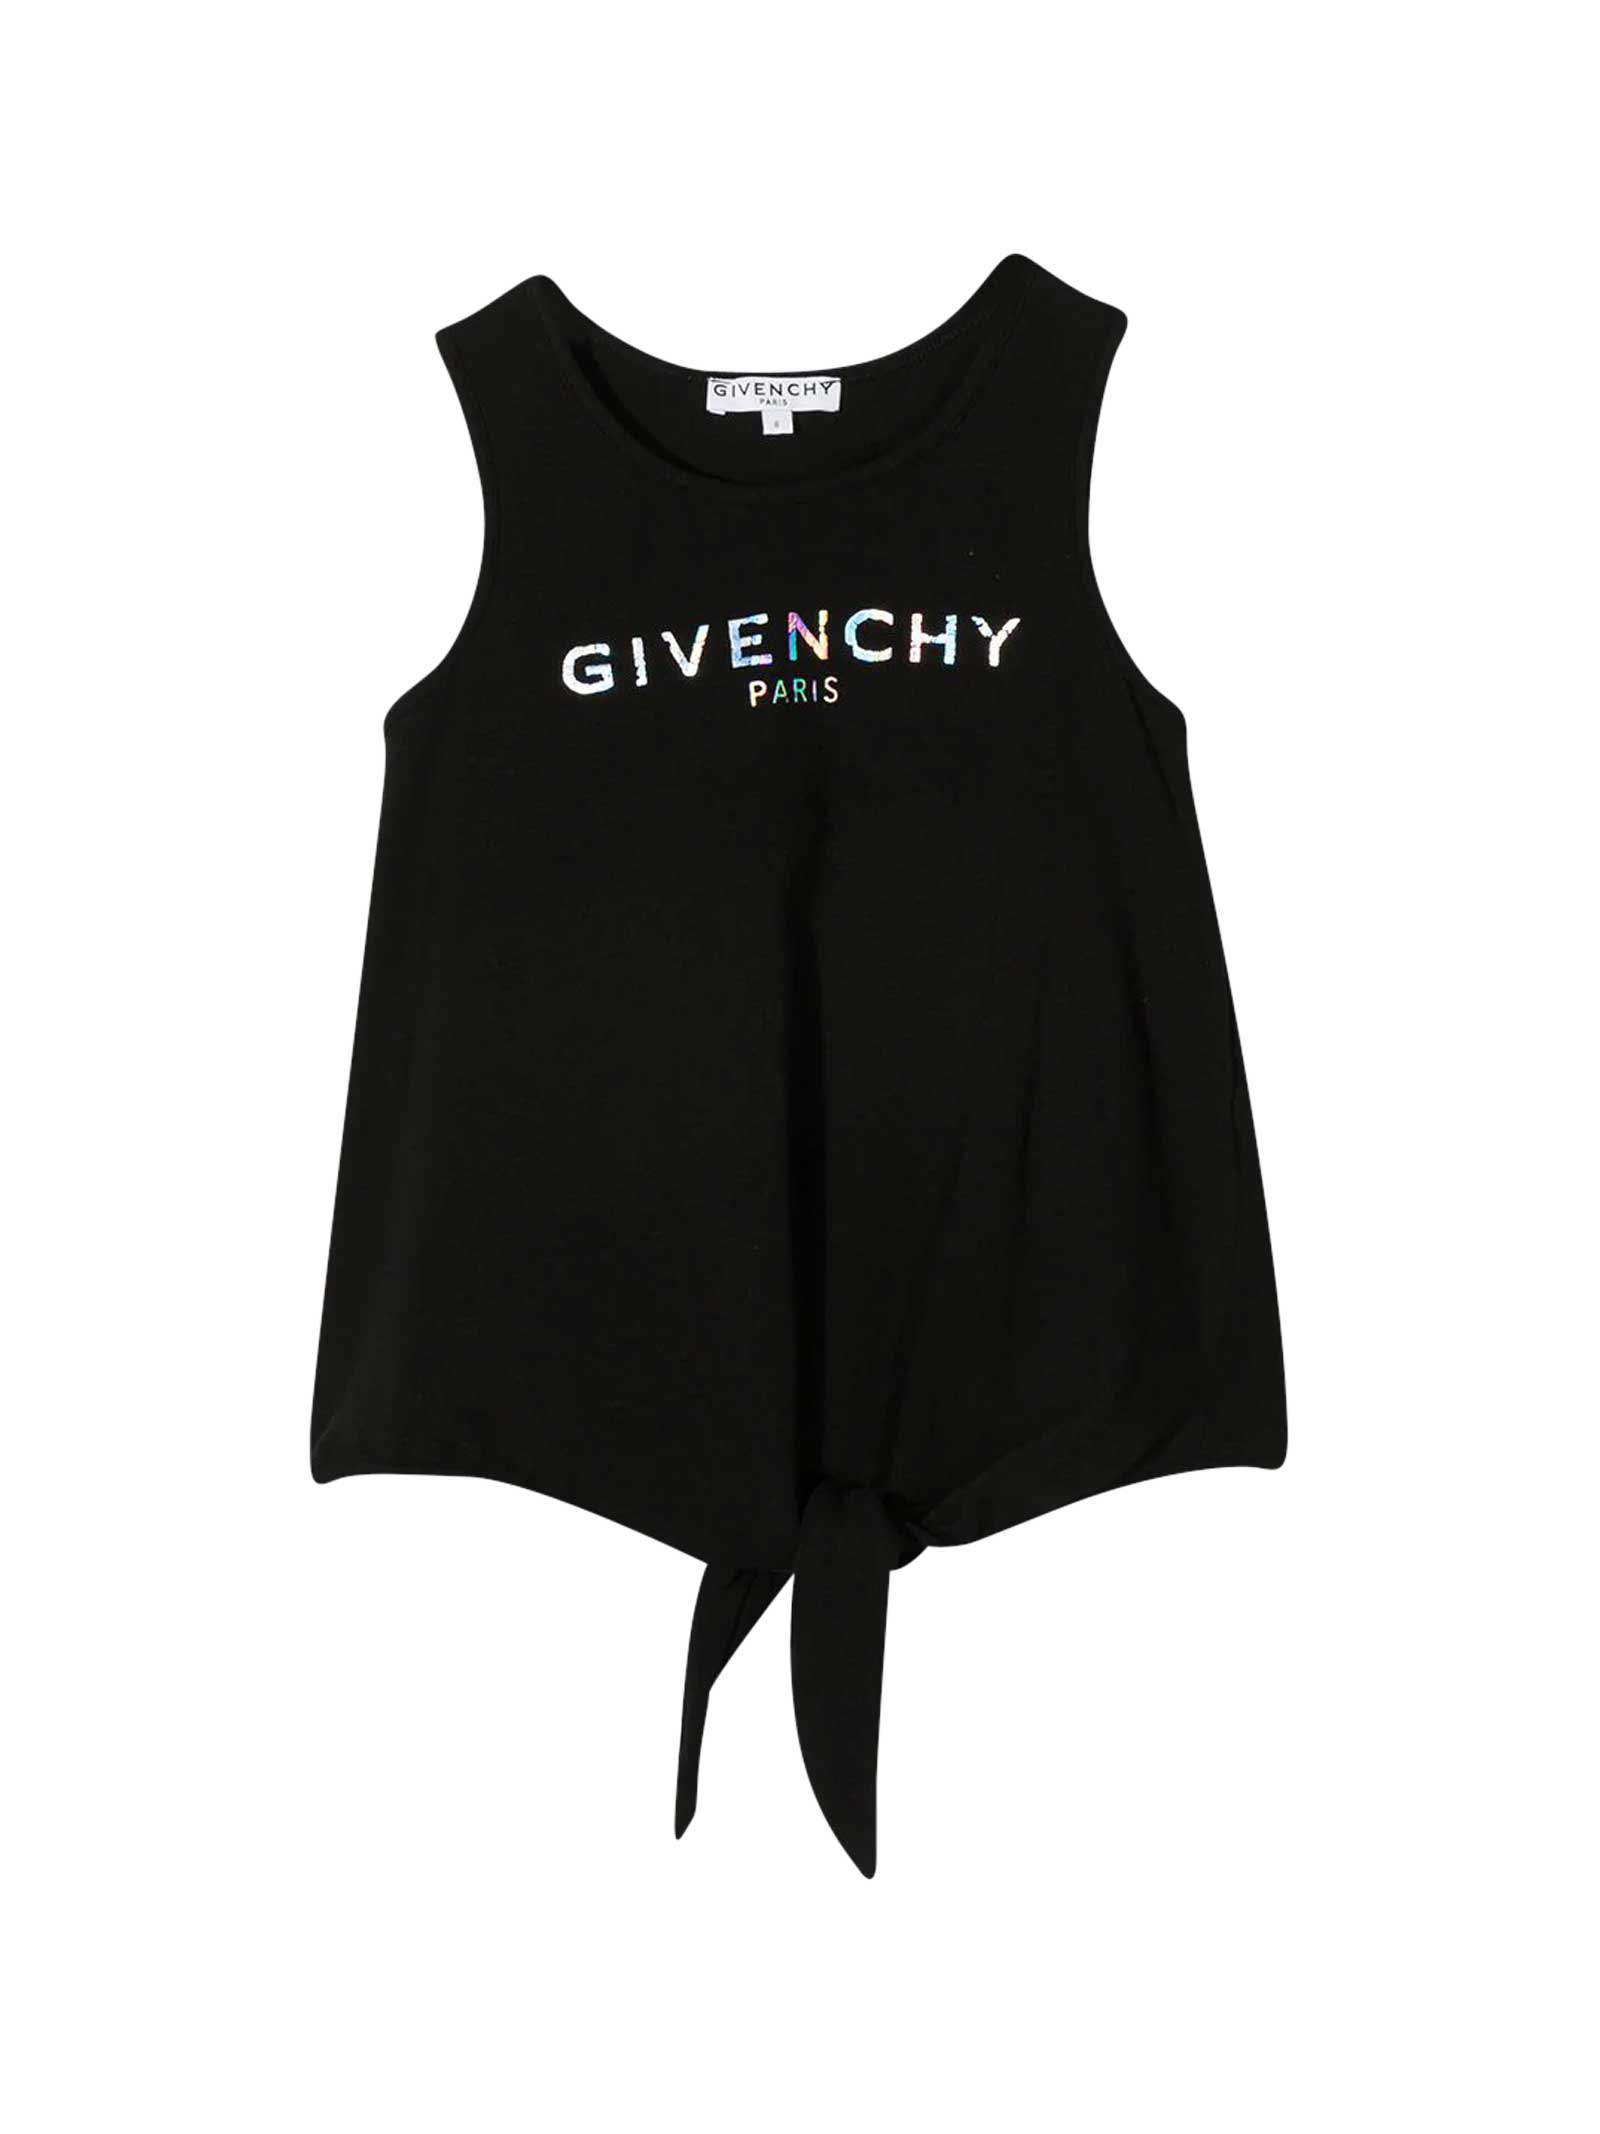 Givenchy Black Tank Top